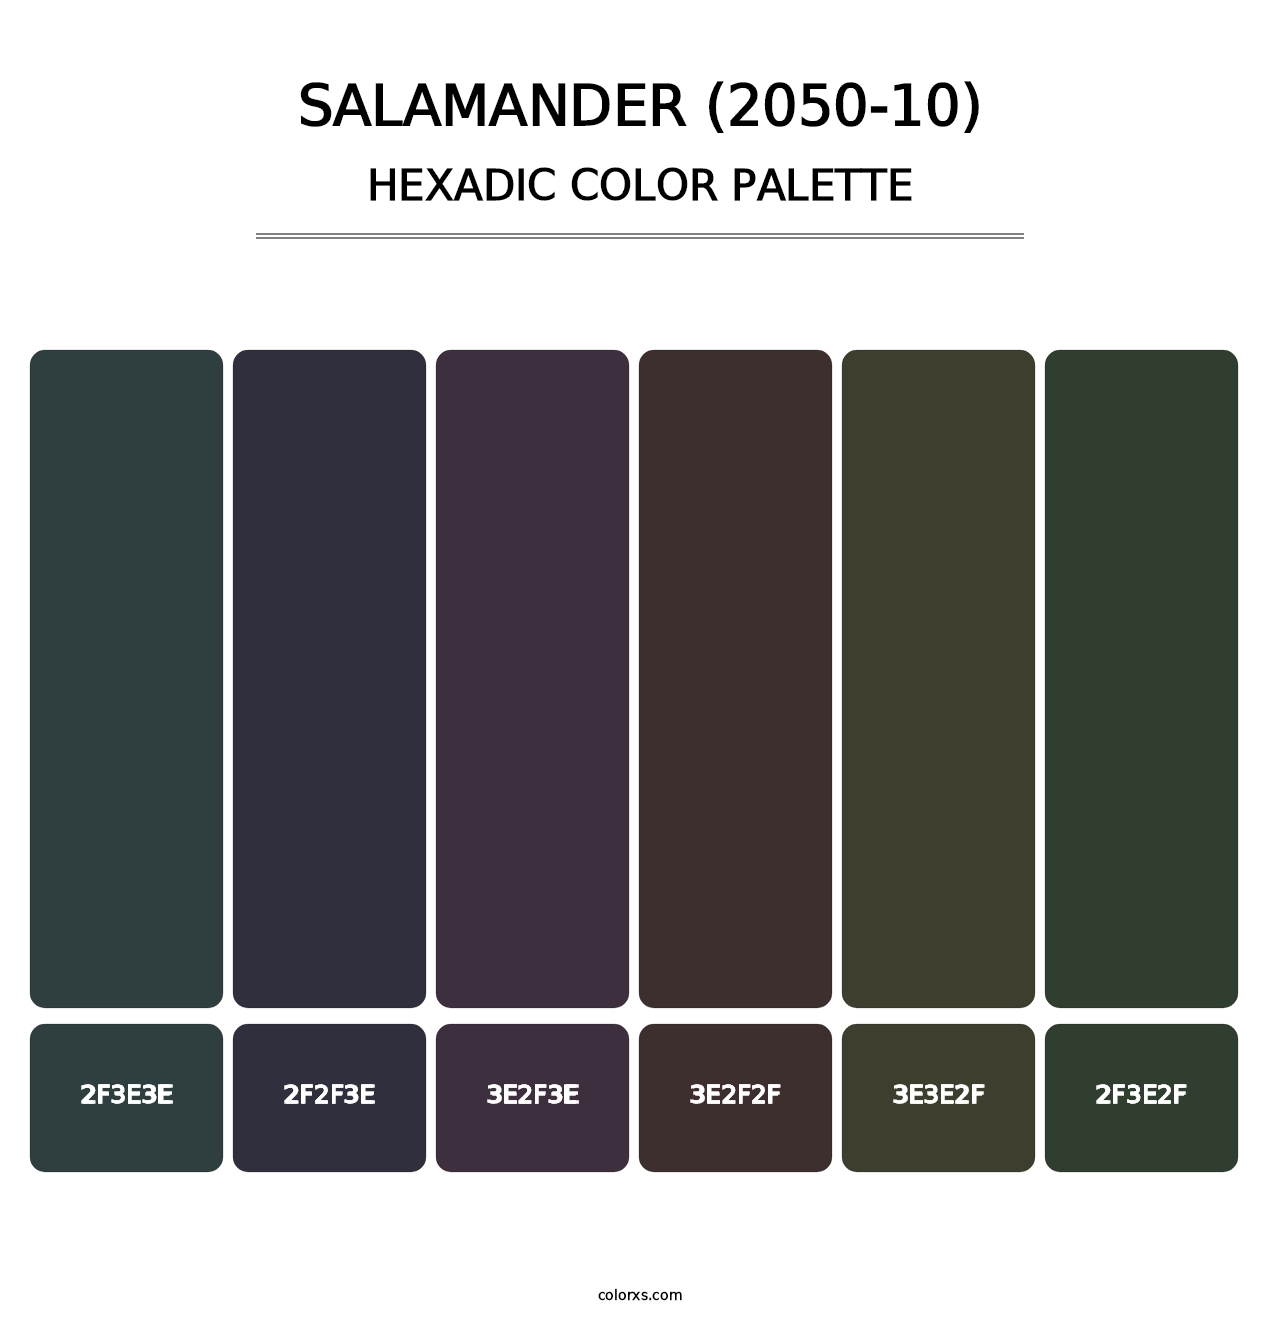 Salamander (2050-10) - Hexadic Color Palette